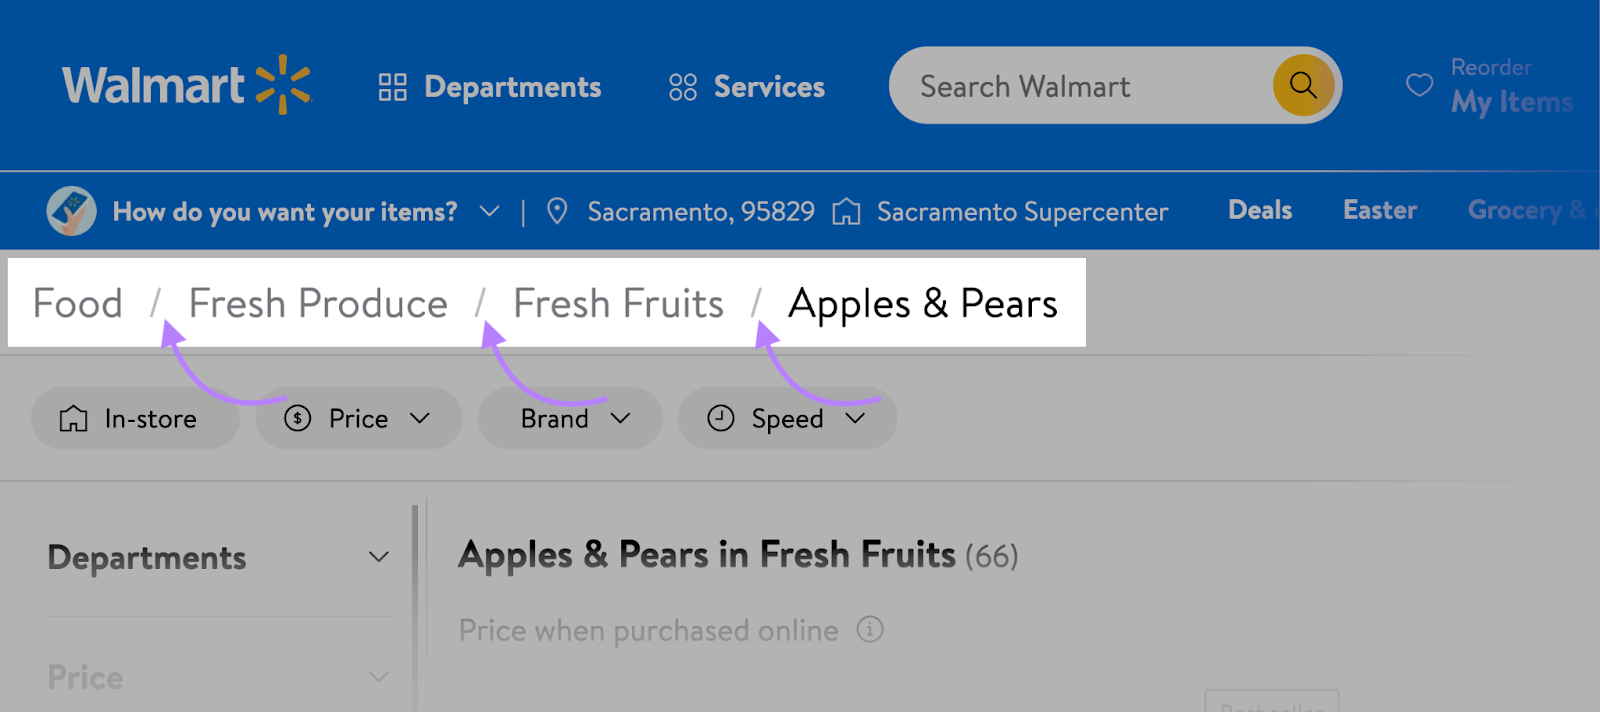 Walmart uses forward slash to separate items